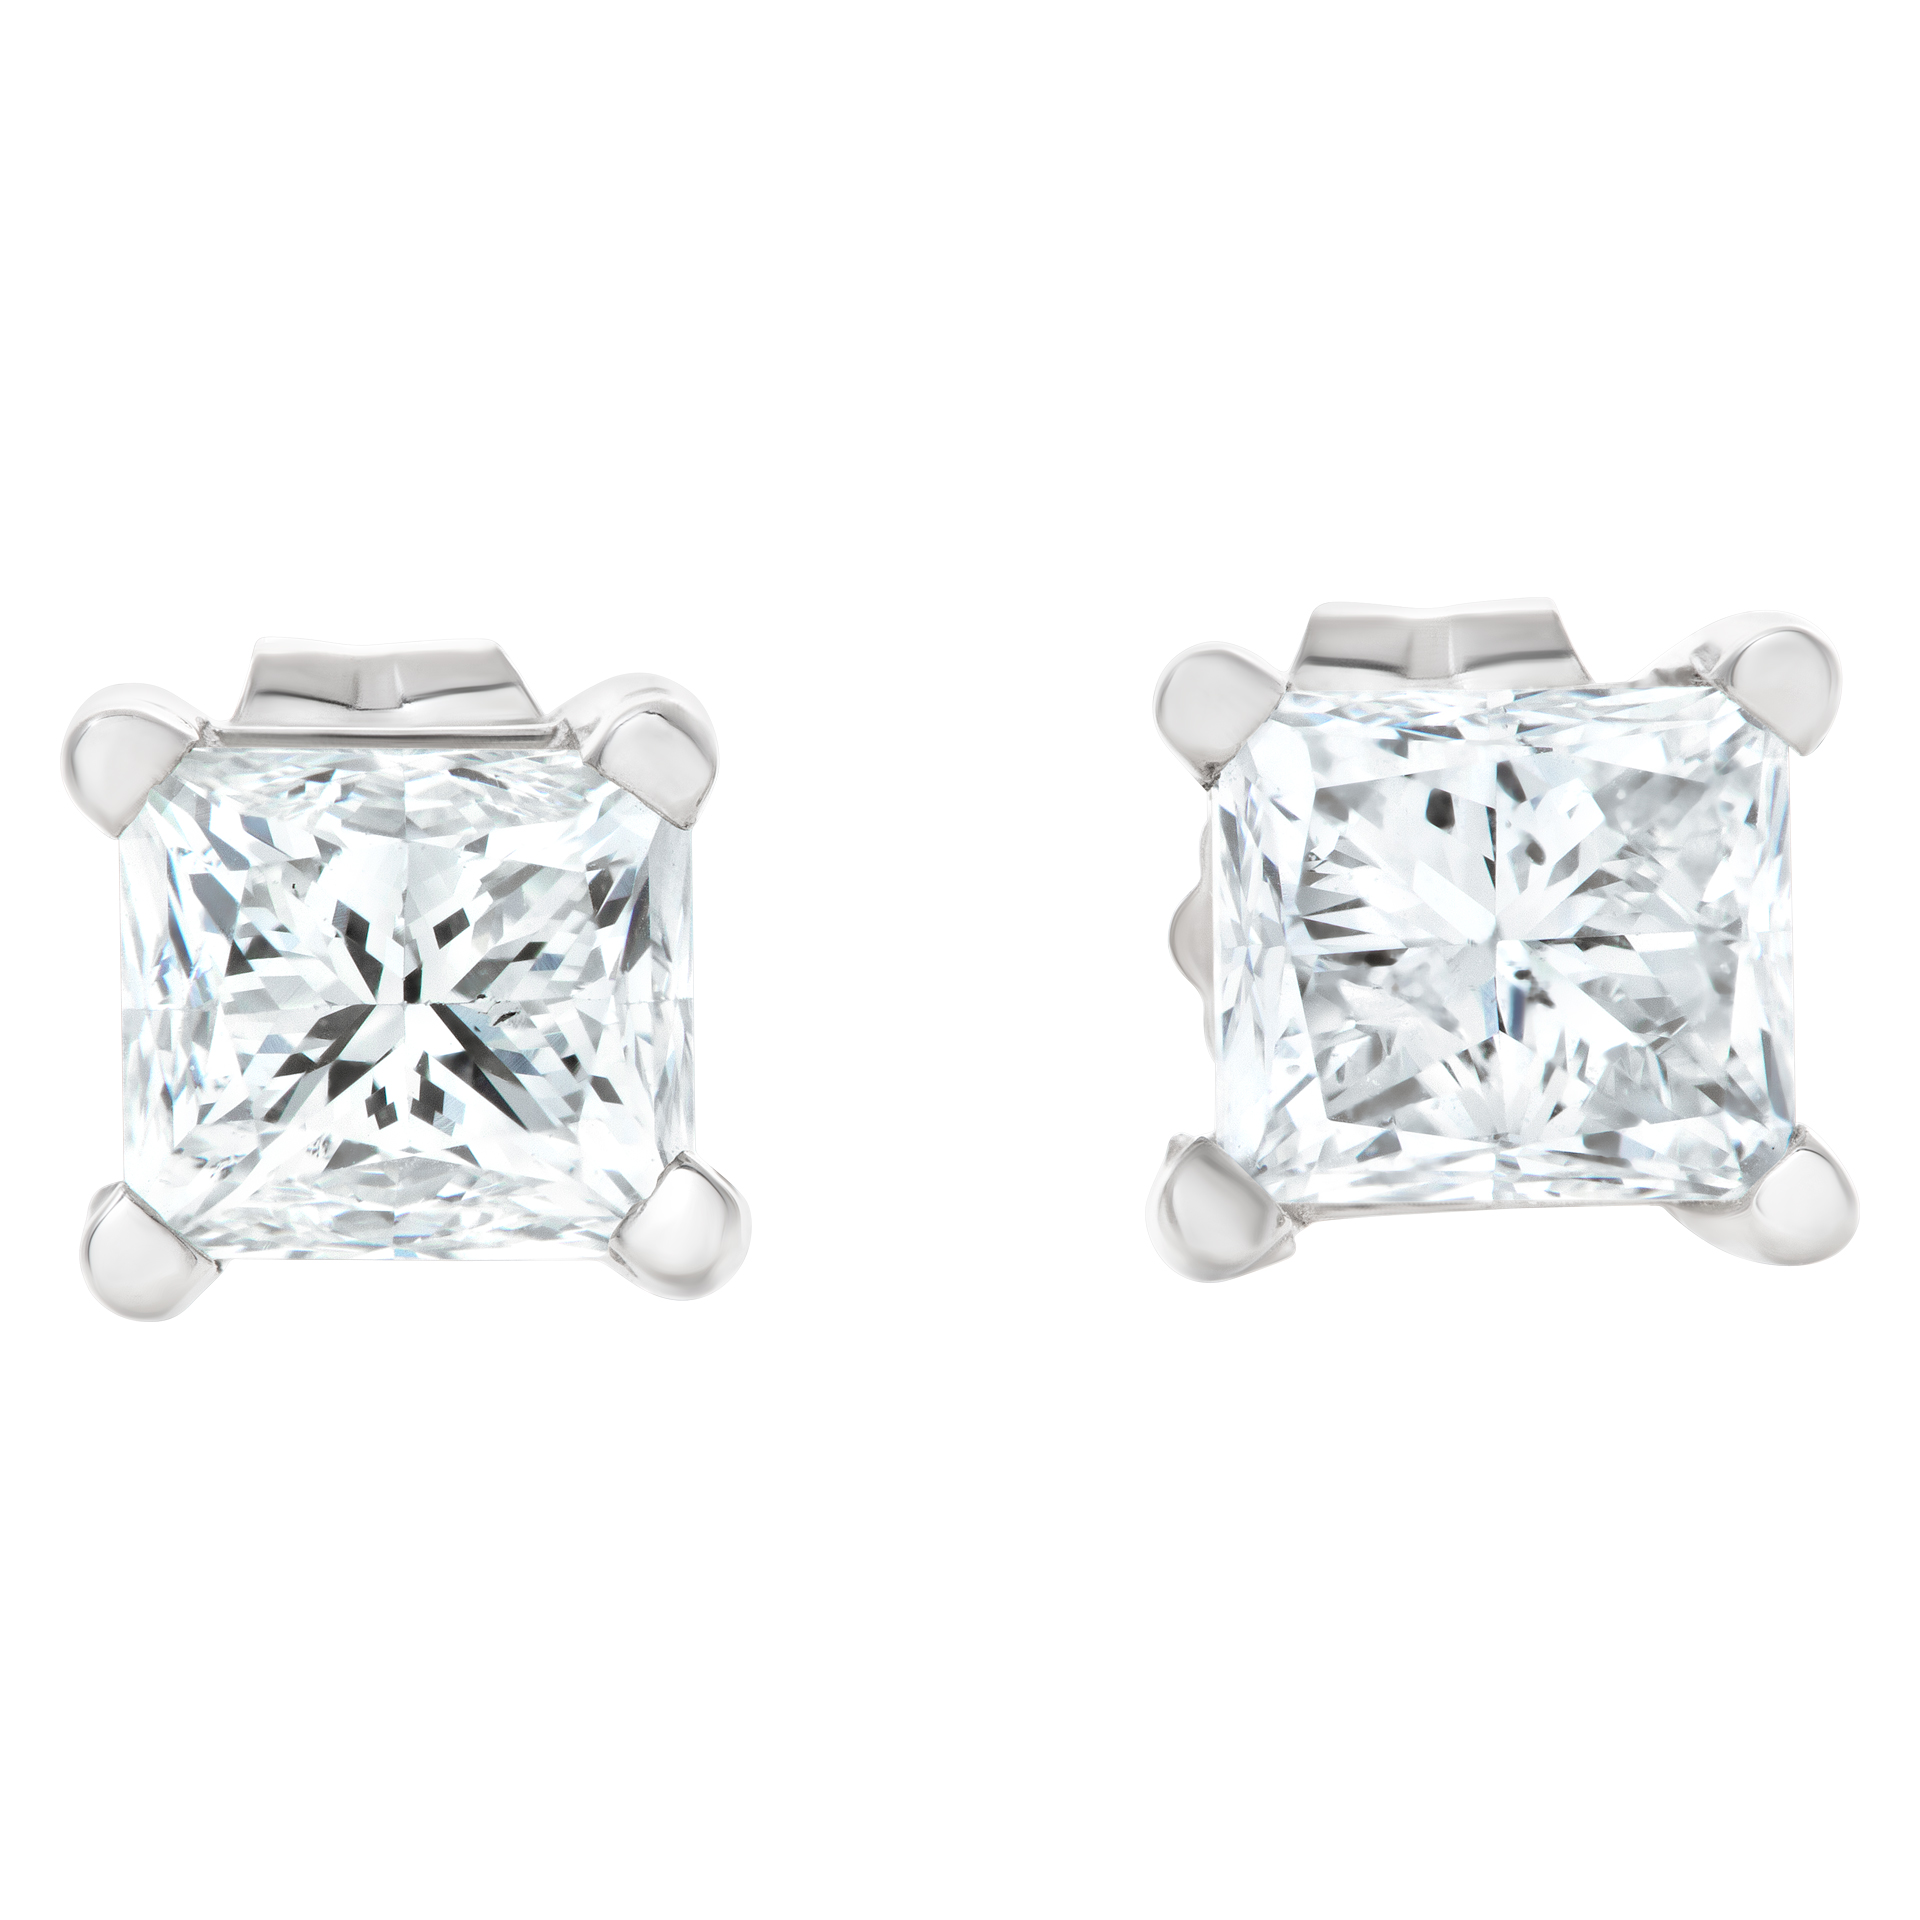 GIA certified rectangular modified brilliant cut diamond studs 0.71carat (L color, SI1 clarity) and 0.74 carat (I color, I1 clarity)